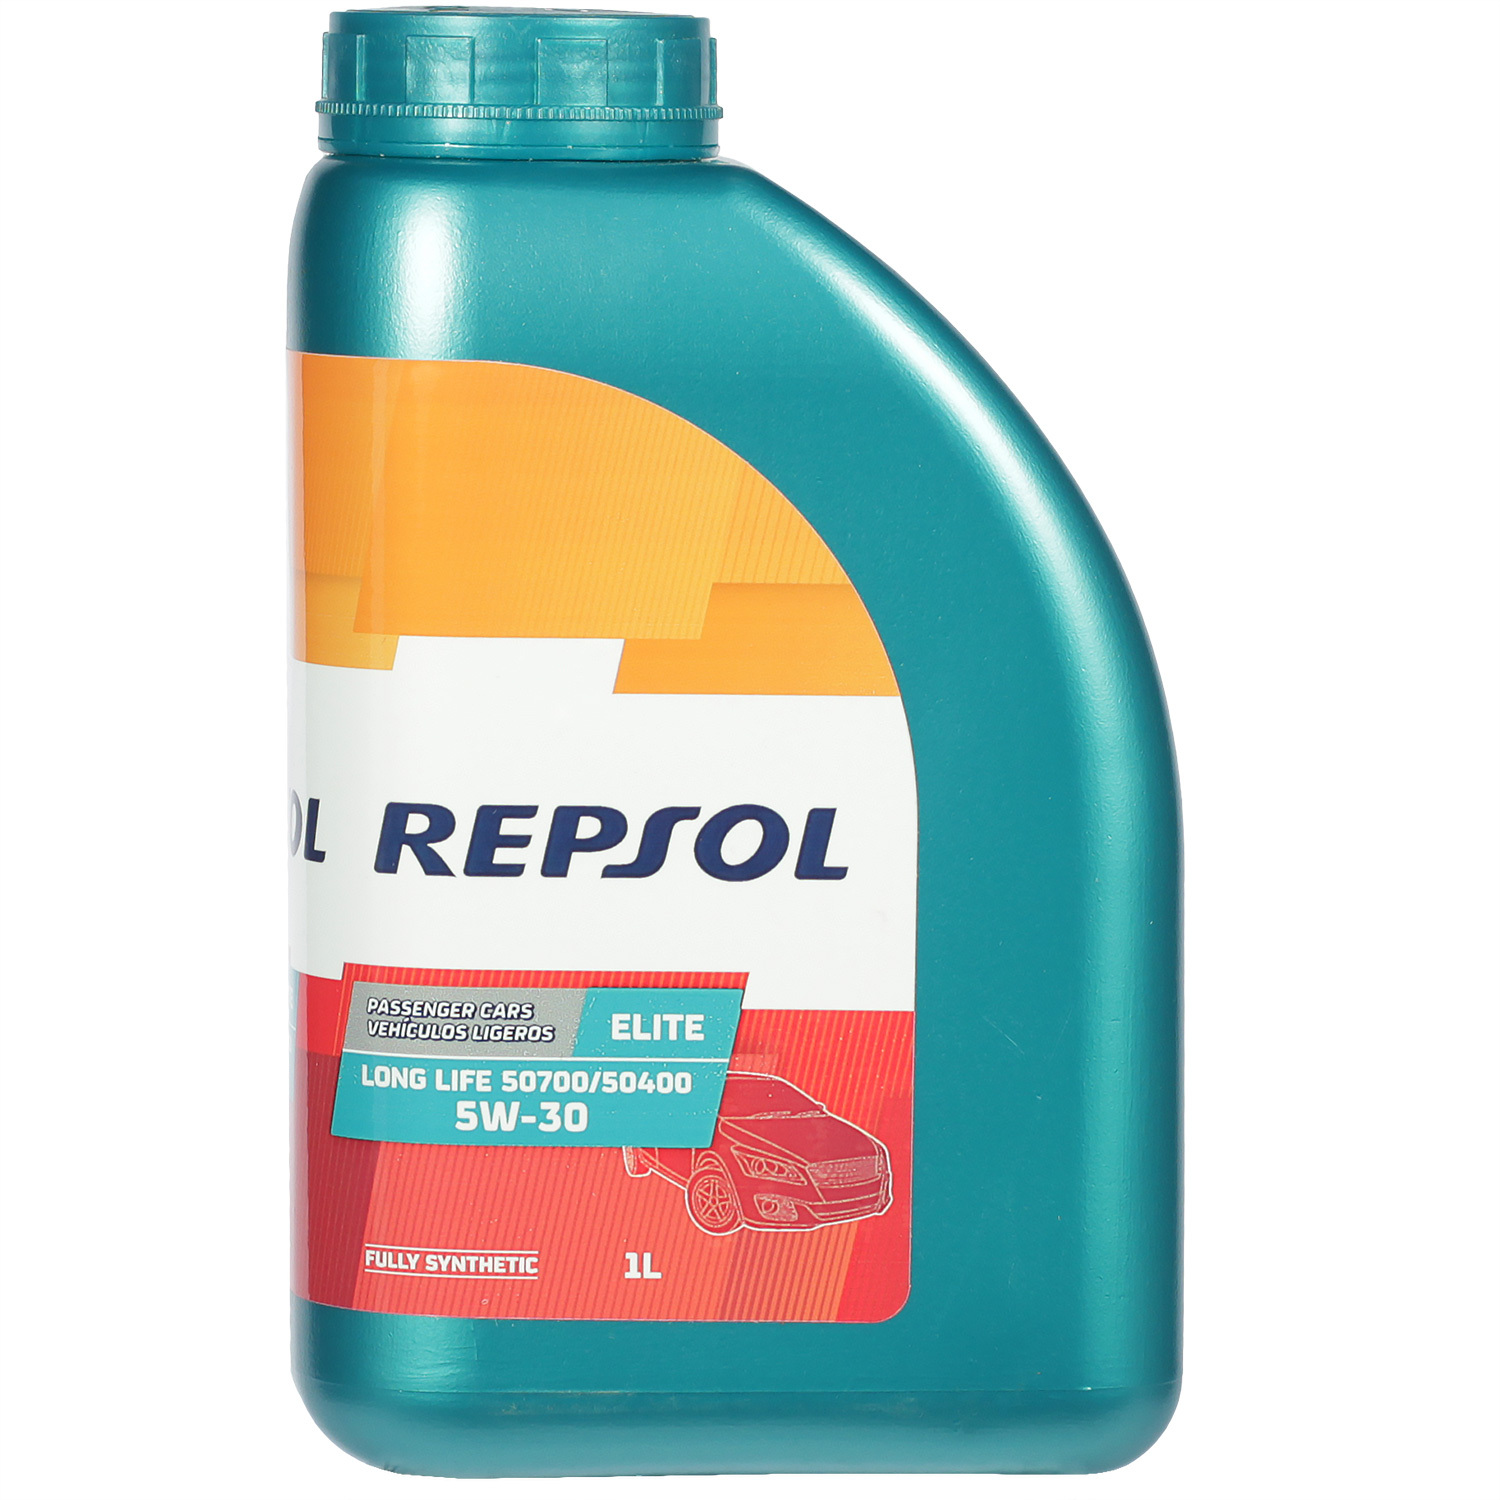 Repsol Моторное масло Repsol Elite LONG LIFE 50700/50400 5W-30, 1 л repsol моторное масло repsol elite long life 50700 50400 5w 30 1 л